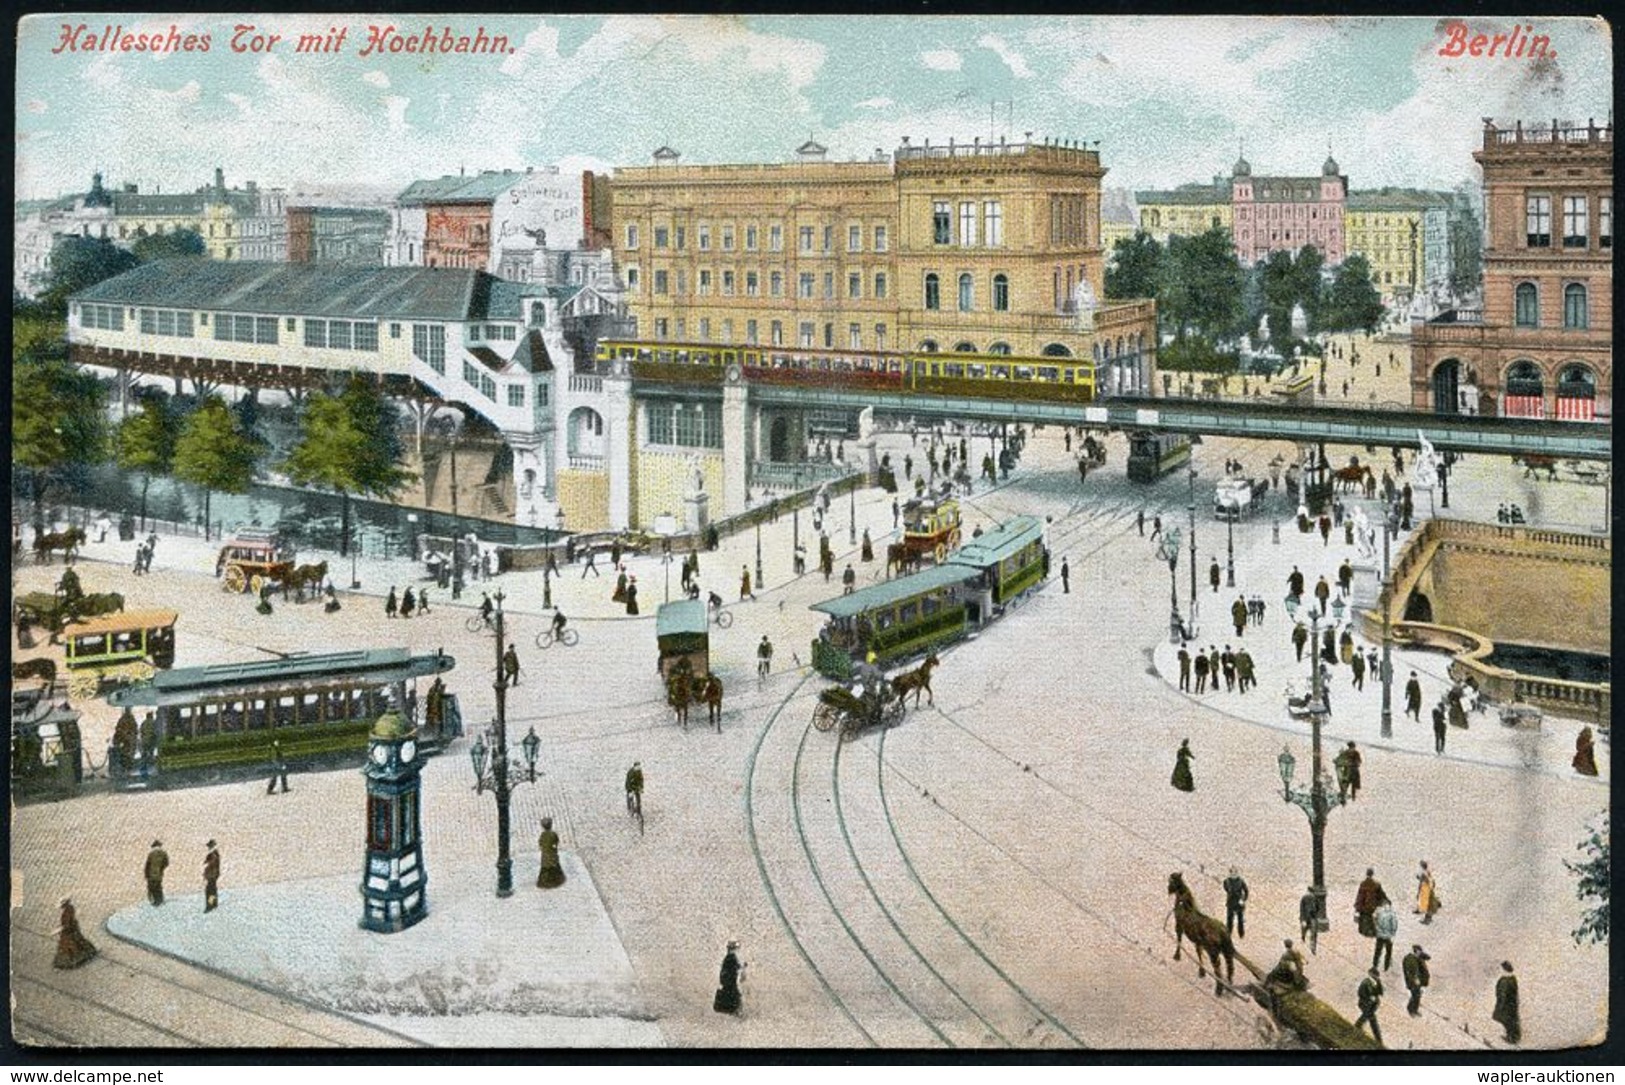 UNTERGRUNDBAHN /U-BAHN : Berlin-Kreuzberg 1905/15 U-Bahnhof Hallesches Tor, 10 Verschiedene Color-Foto-Ak. , Meist Gebr. - Trains